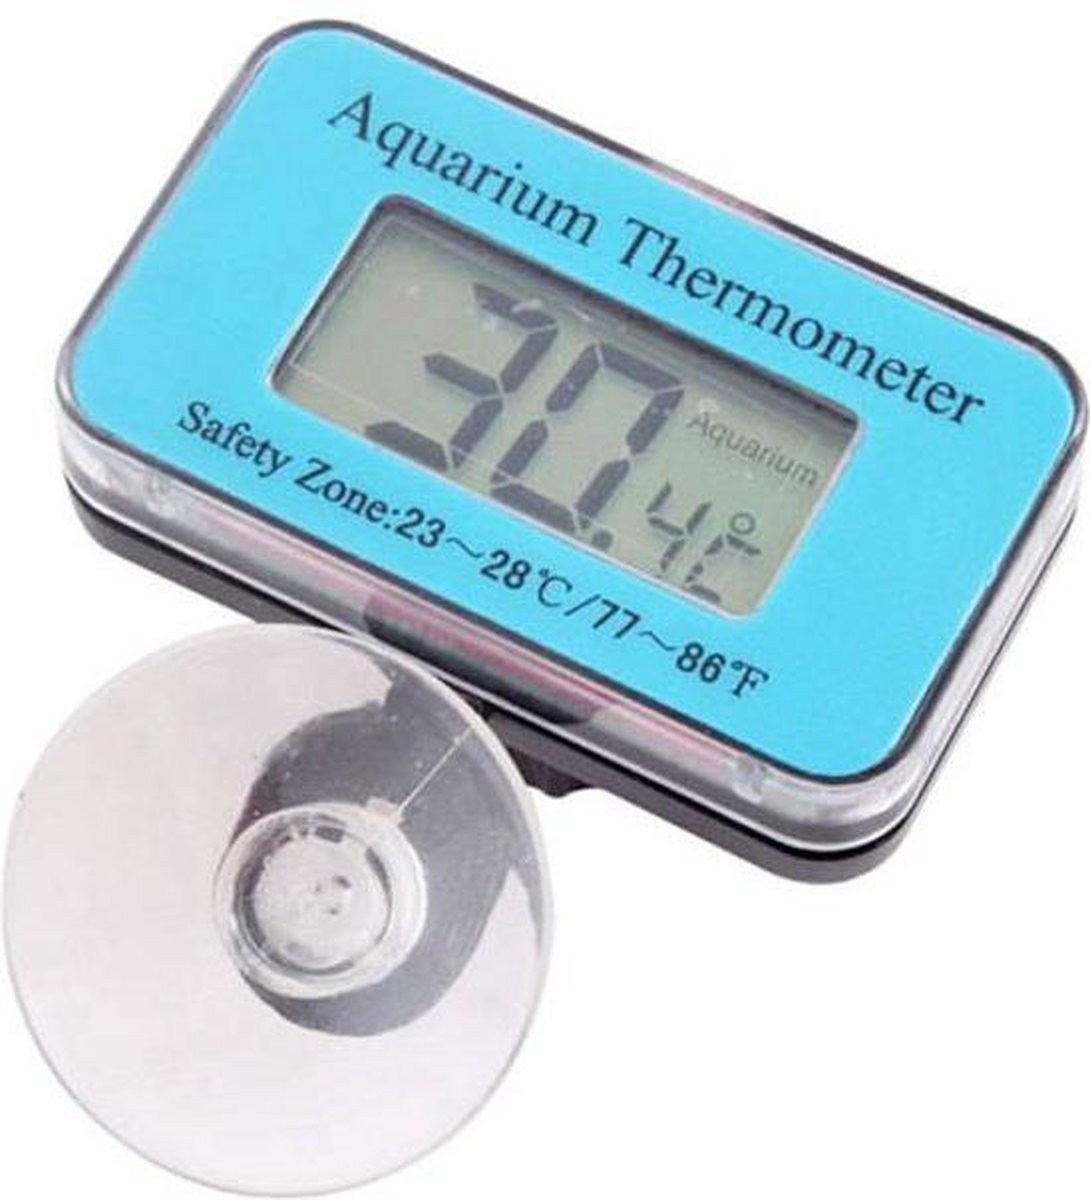 Digitale Thermometer Blauw / Aquarium Thermometer / Digi Thermo